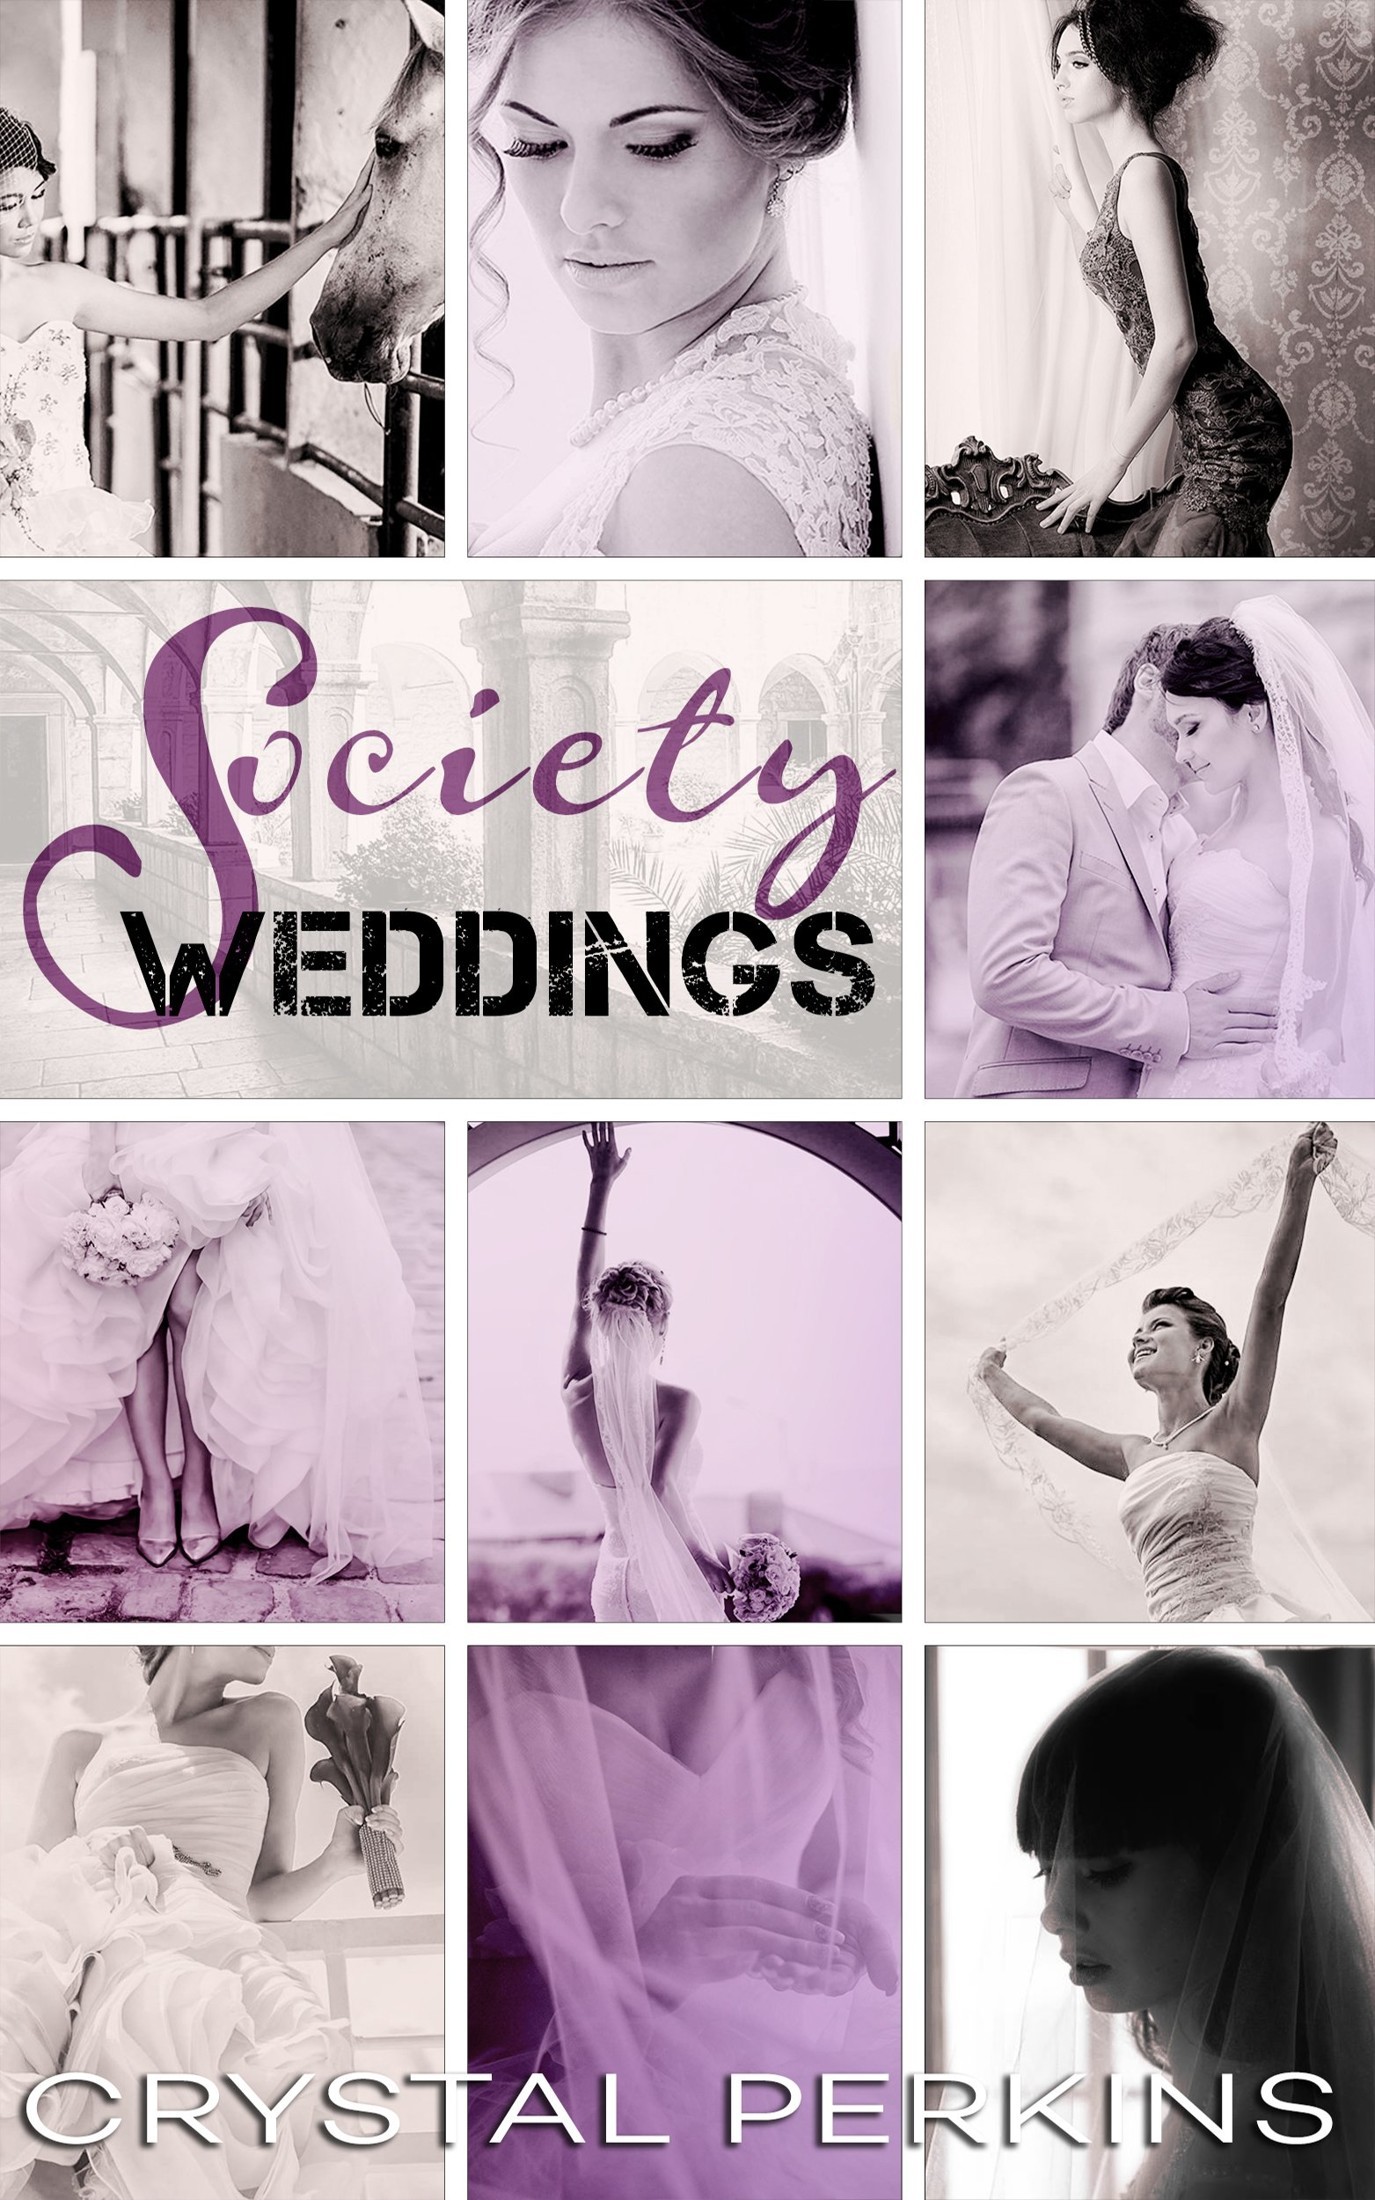 Society Weddings (Corrigan & Co. Book 11) by Crystal Perkins